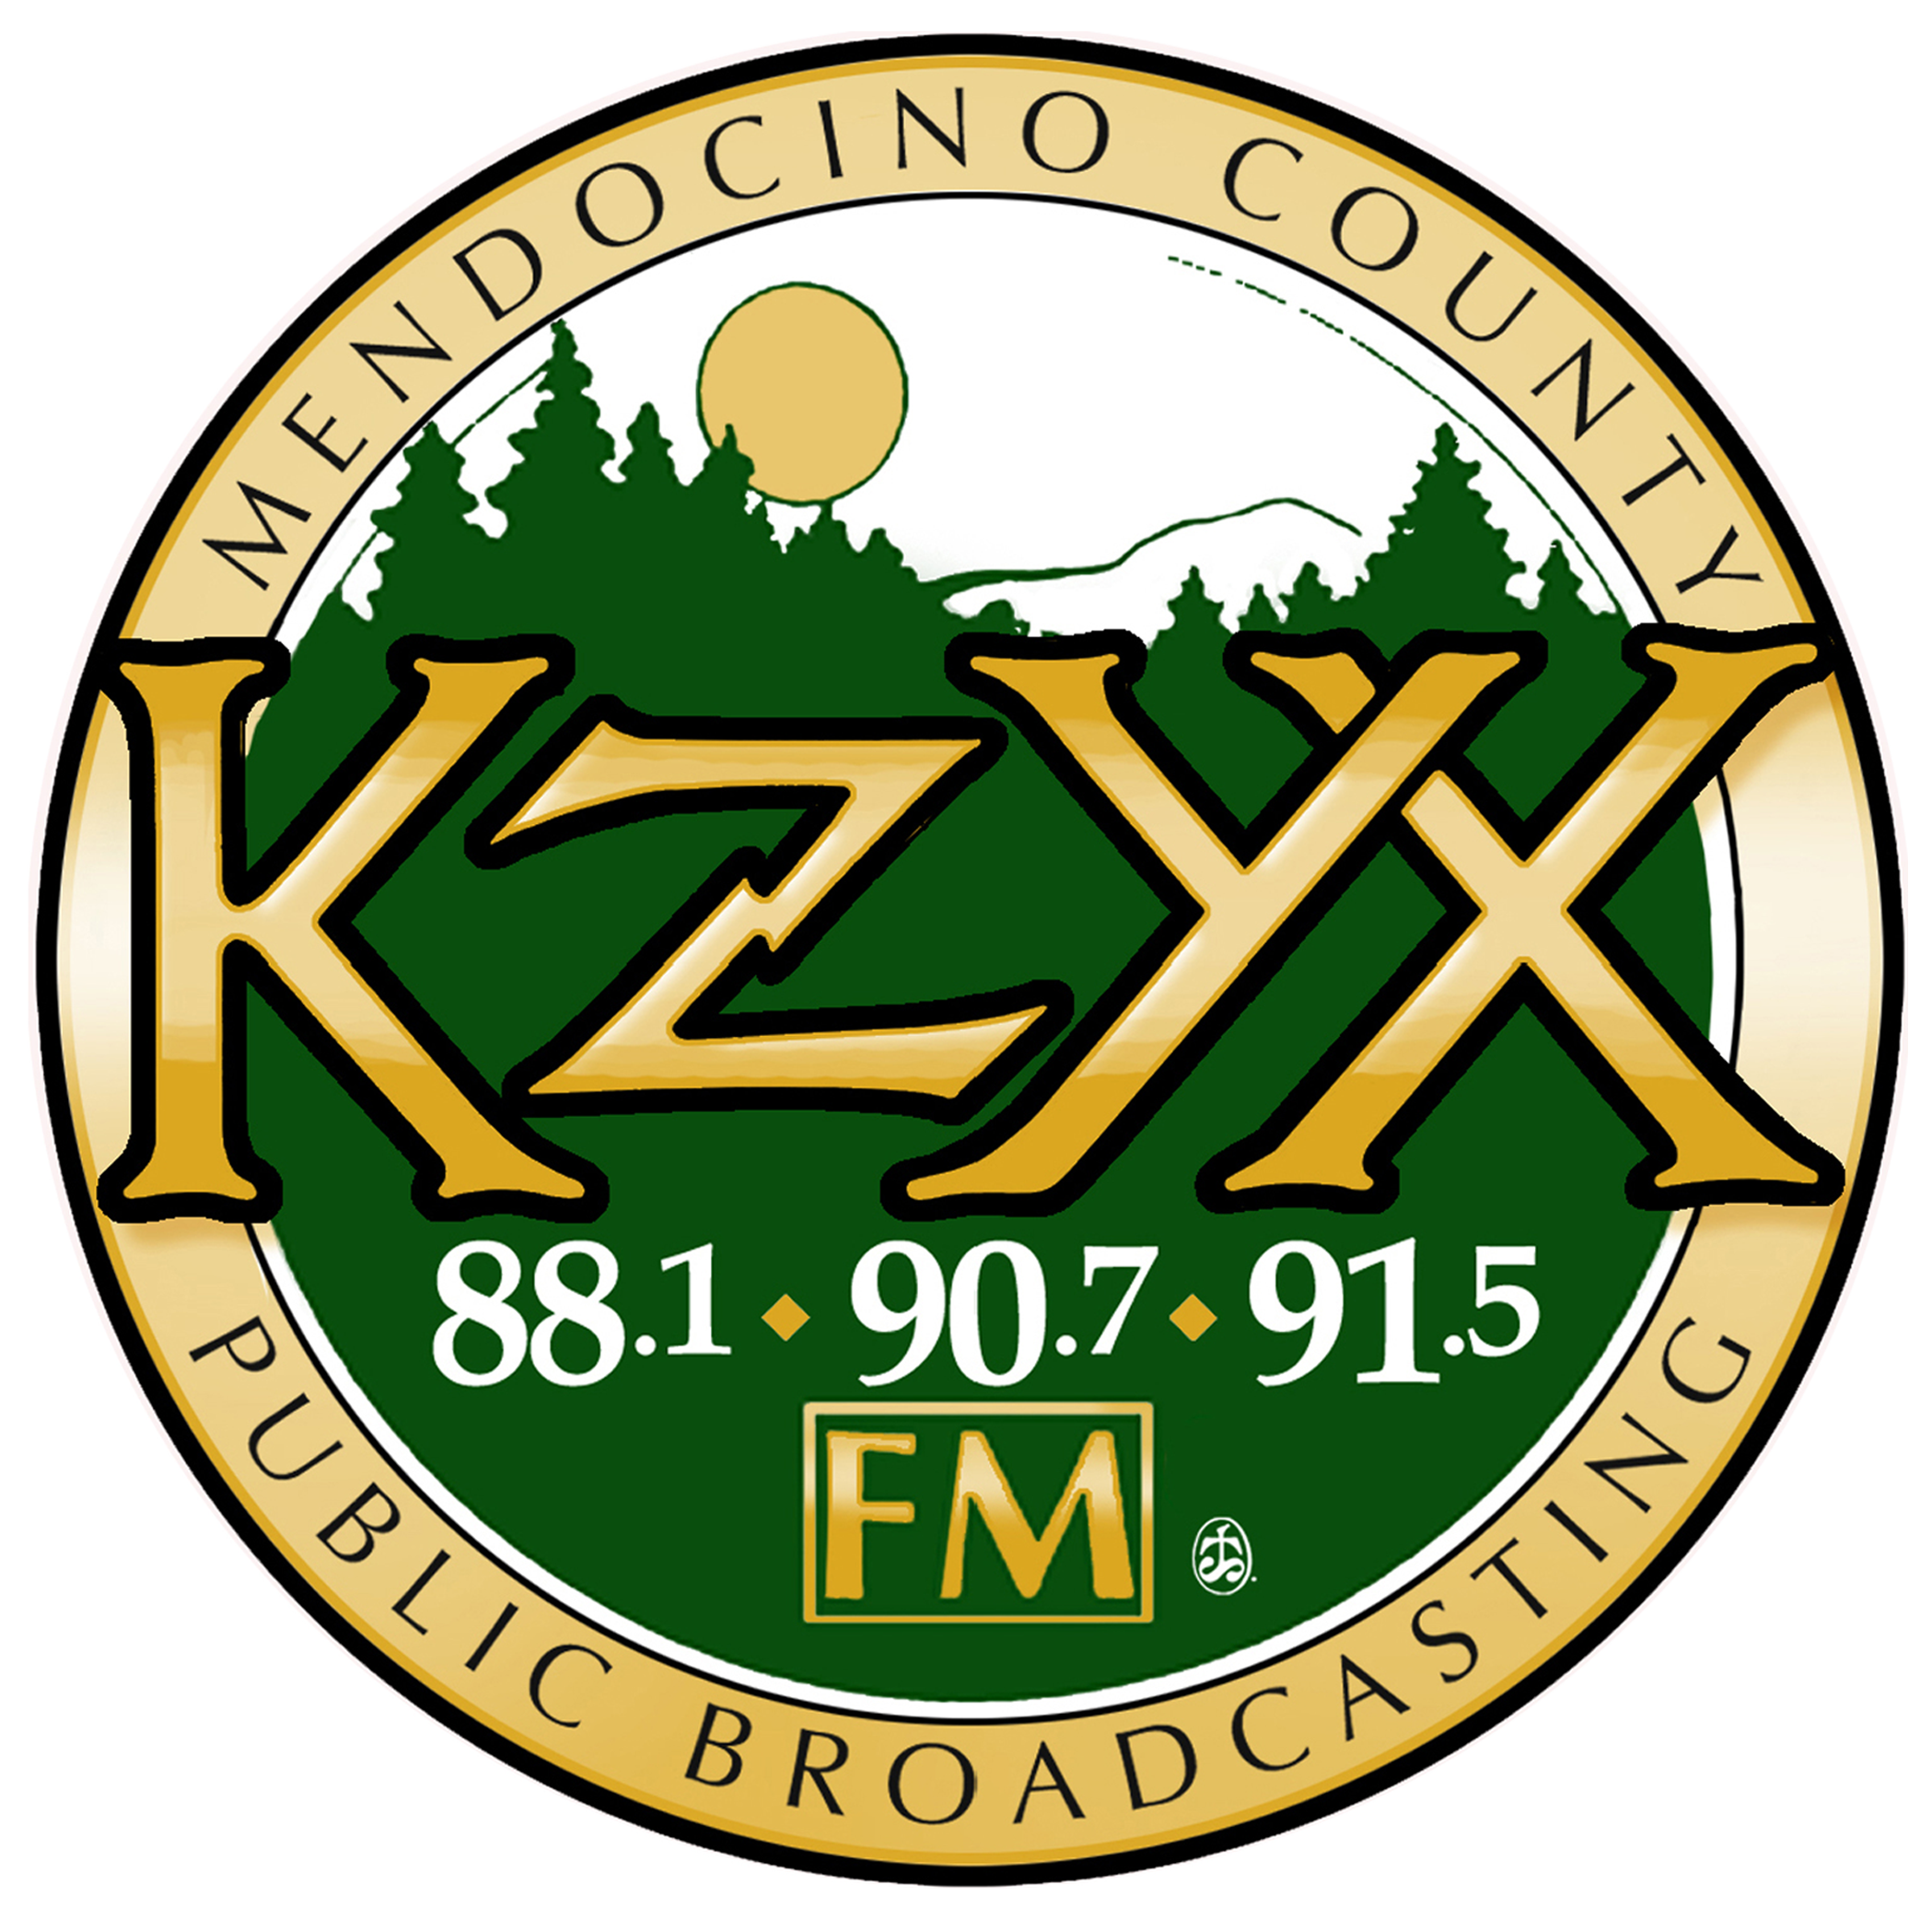 Mendocino County Public Broadcasting KZYX